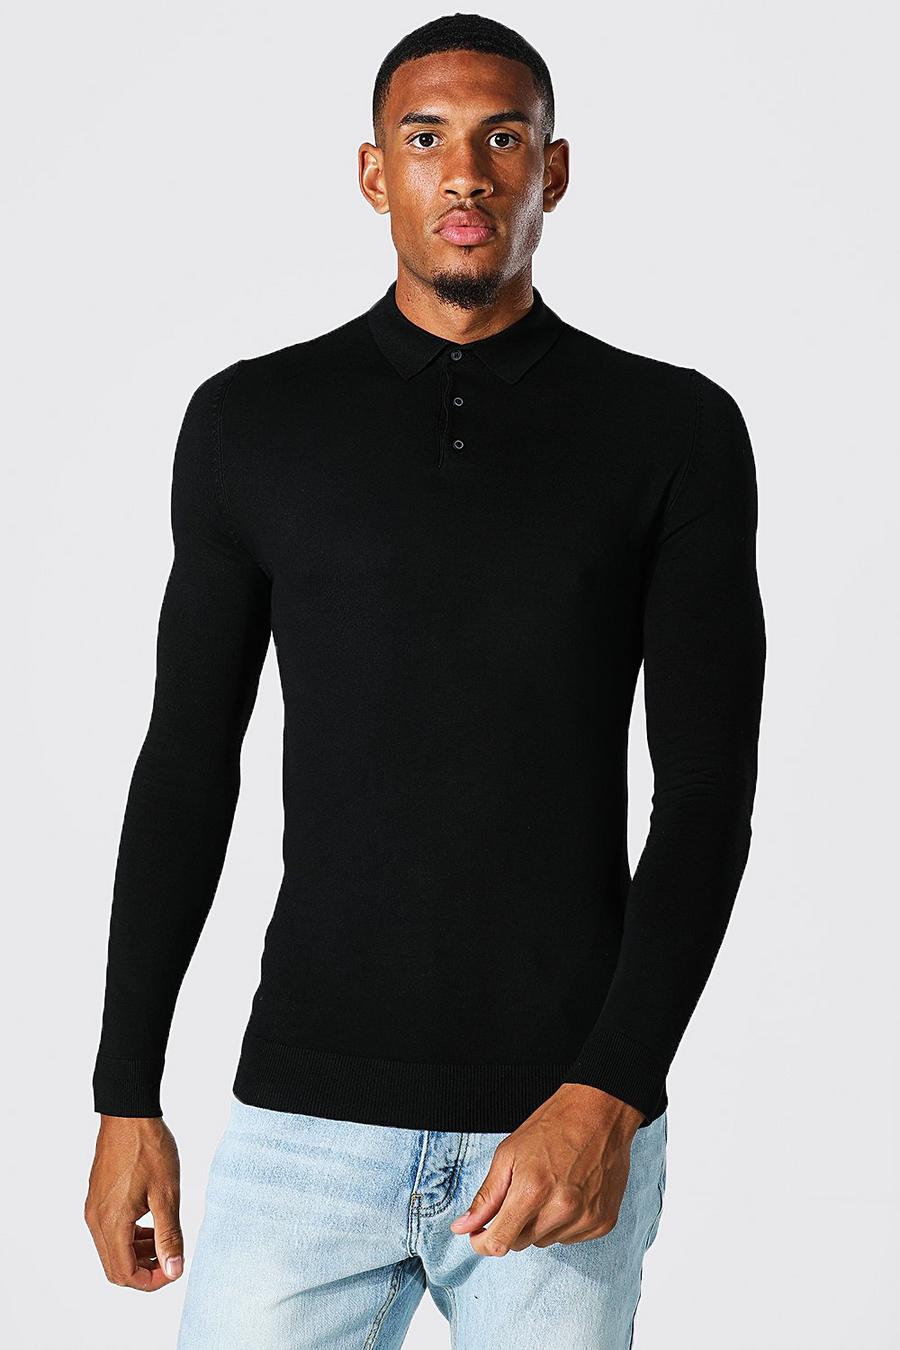 Black negro חולצת פולו סרוגה בגזרה צמודה מבד ממוחזר, לגברים גבוהים